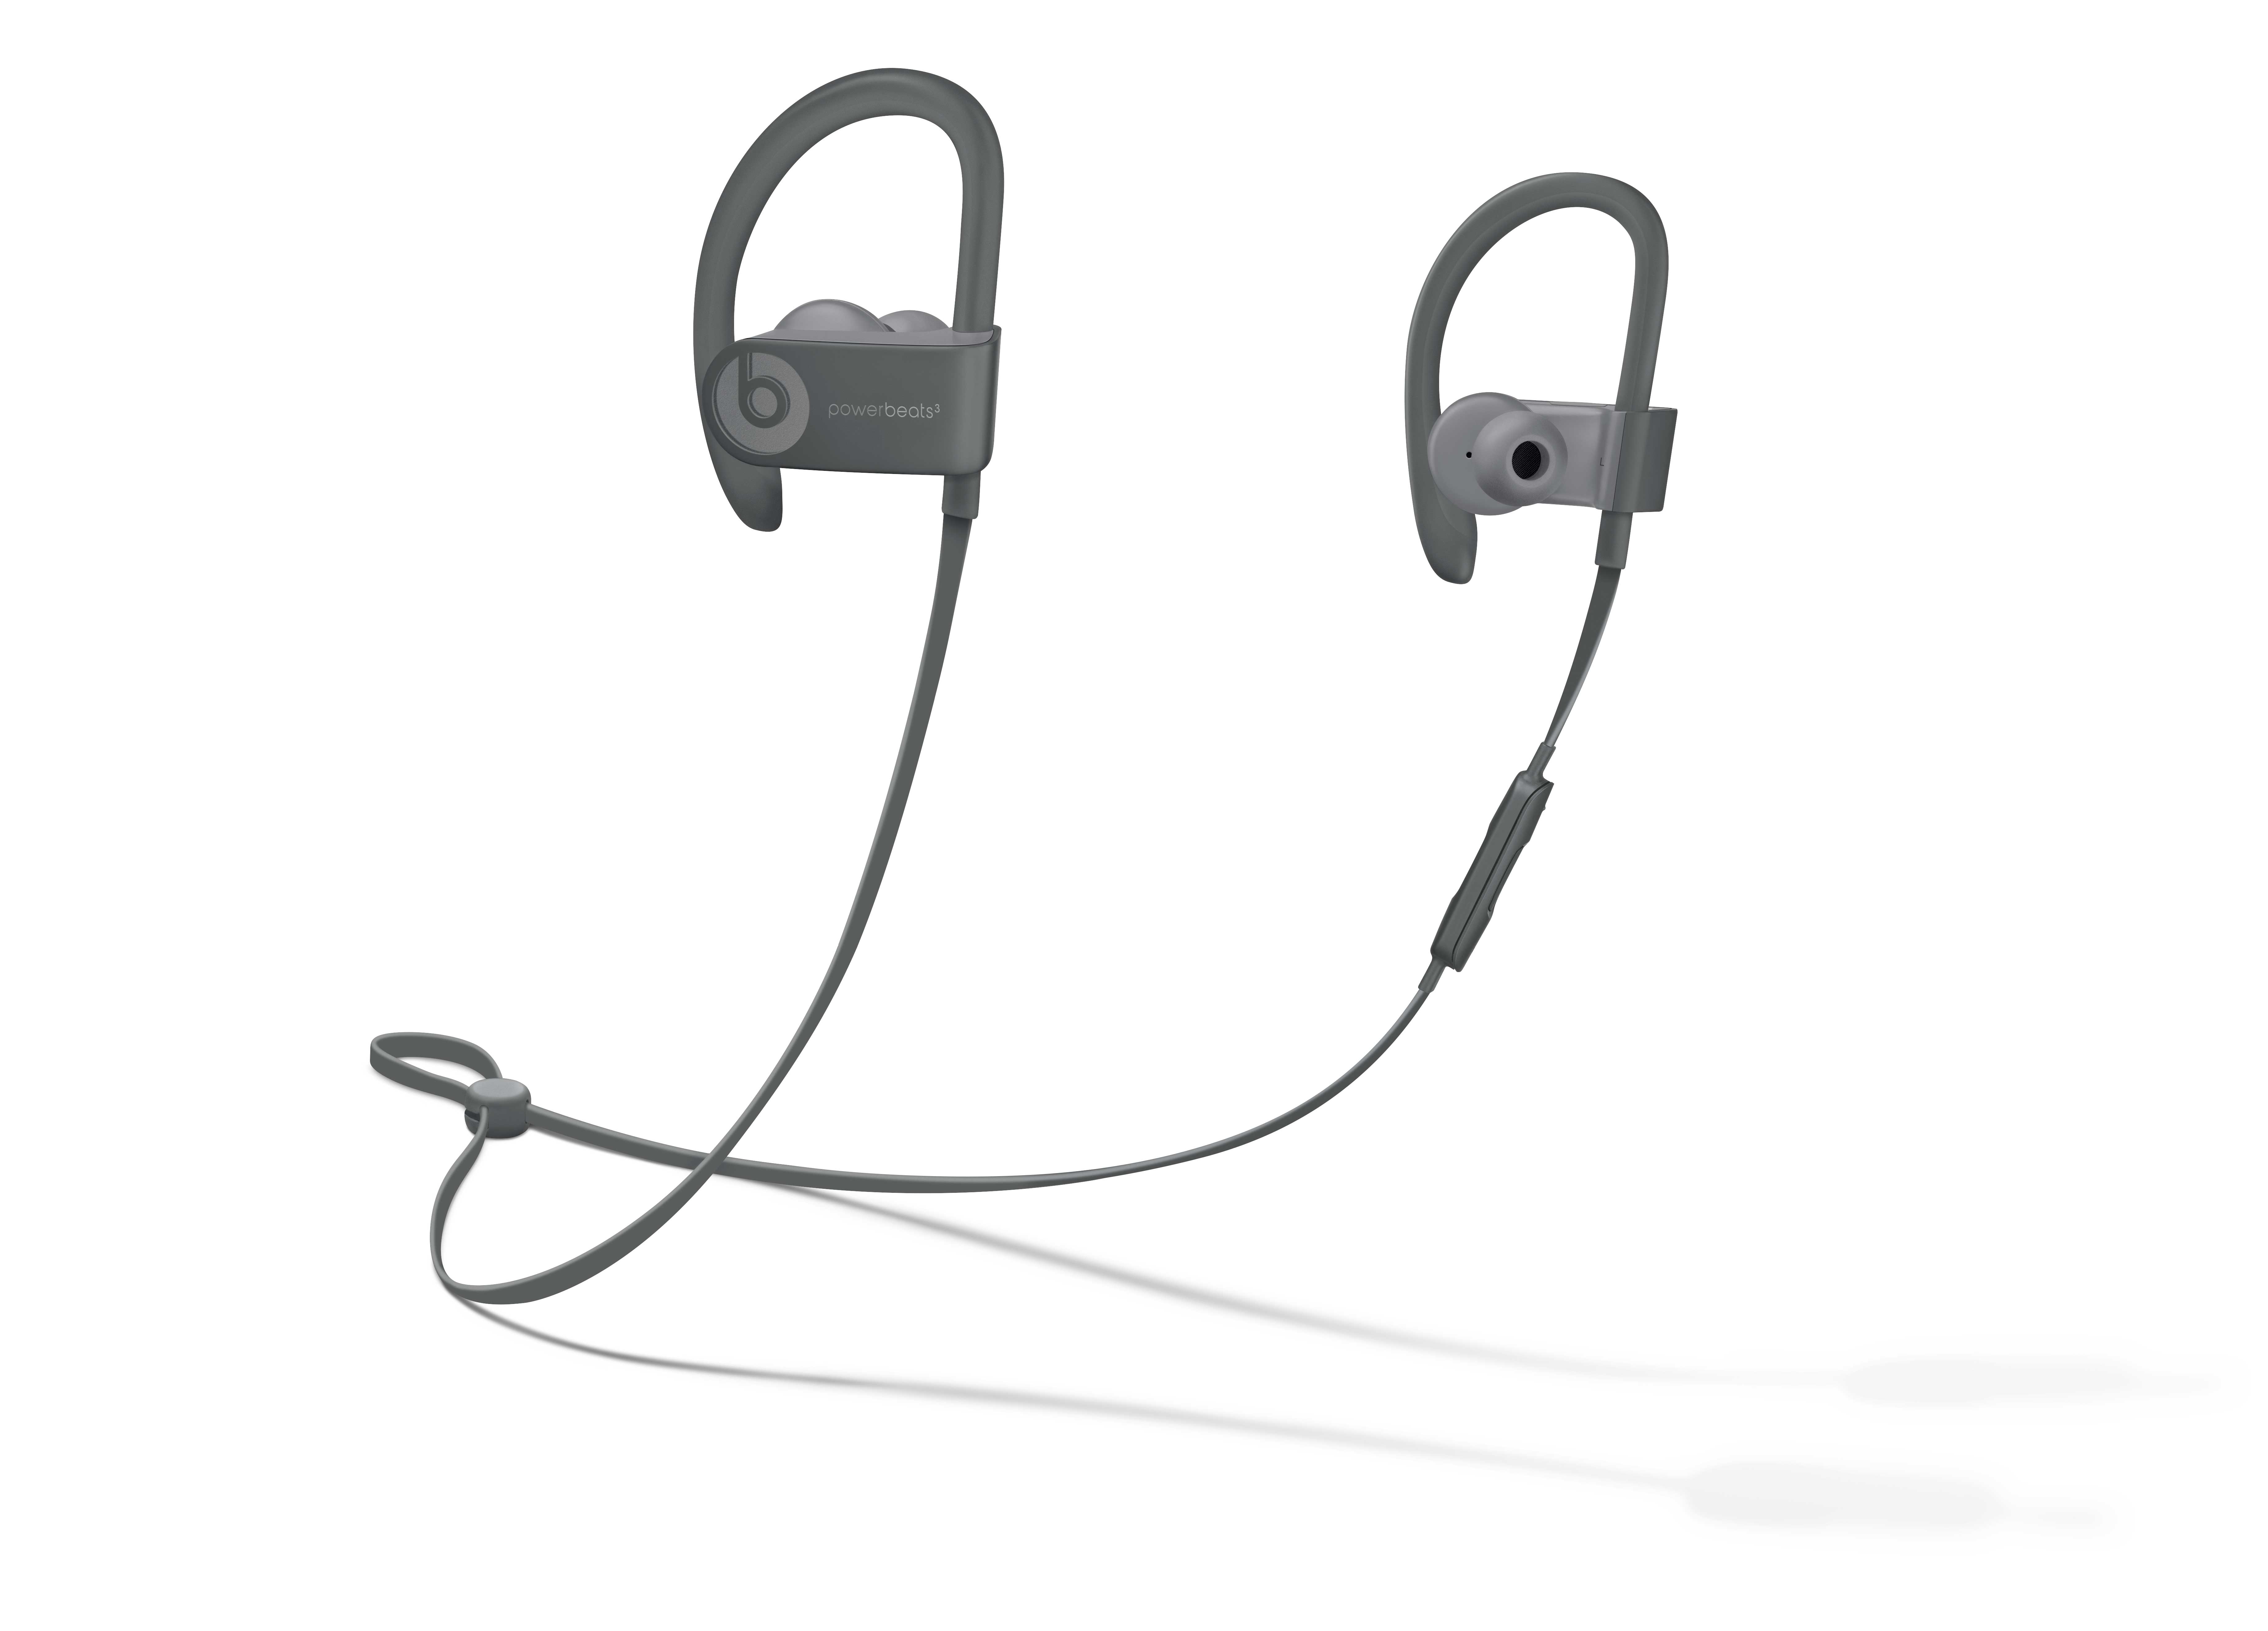 Restored Apple Beats Powerbeats3 Wireless Asphalt Gray Neighborhood Collection In Ear Headphones MPXM2LL/A (Refurbished) - image 1 of 1